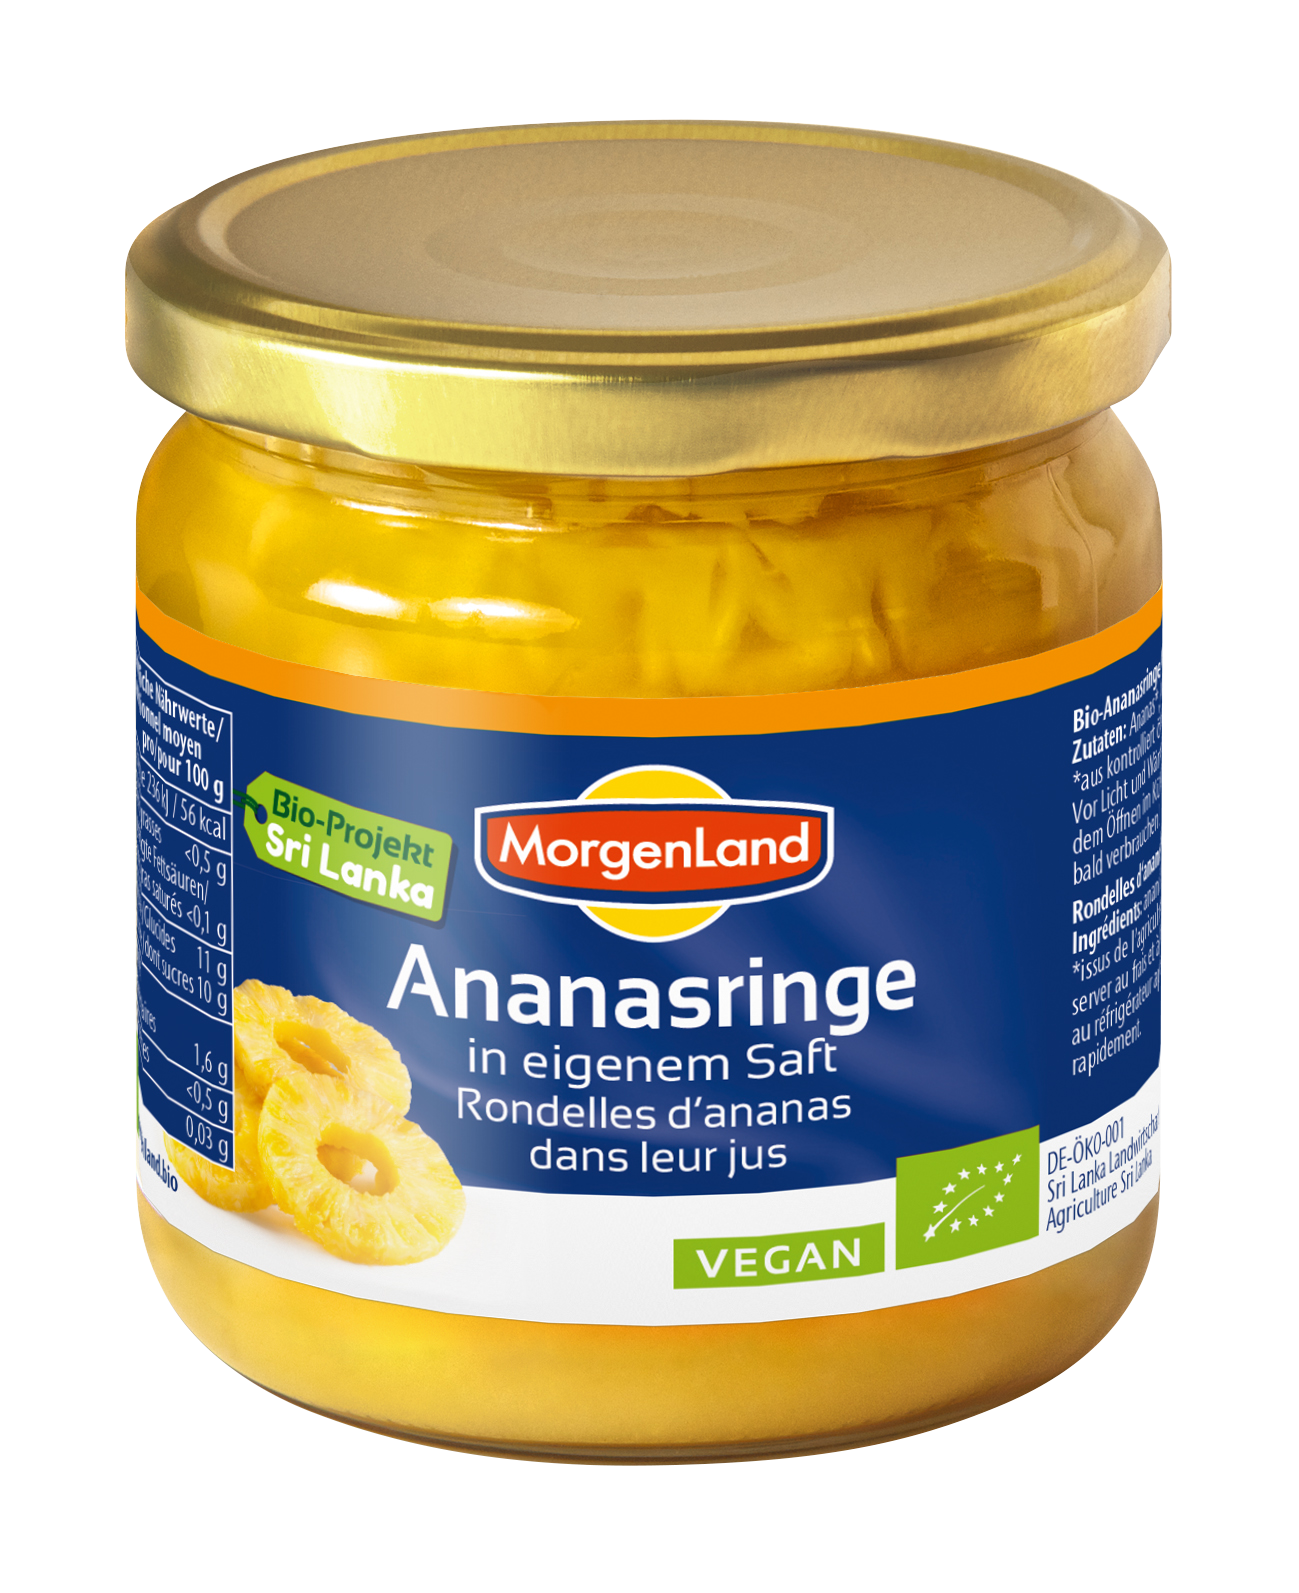 Morgenland Ananasringe in eigenem Saft 370g/nl